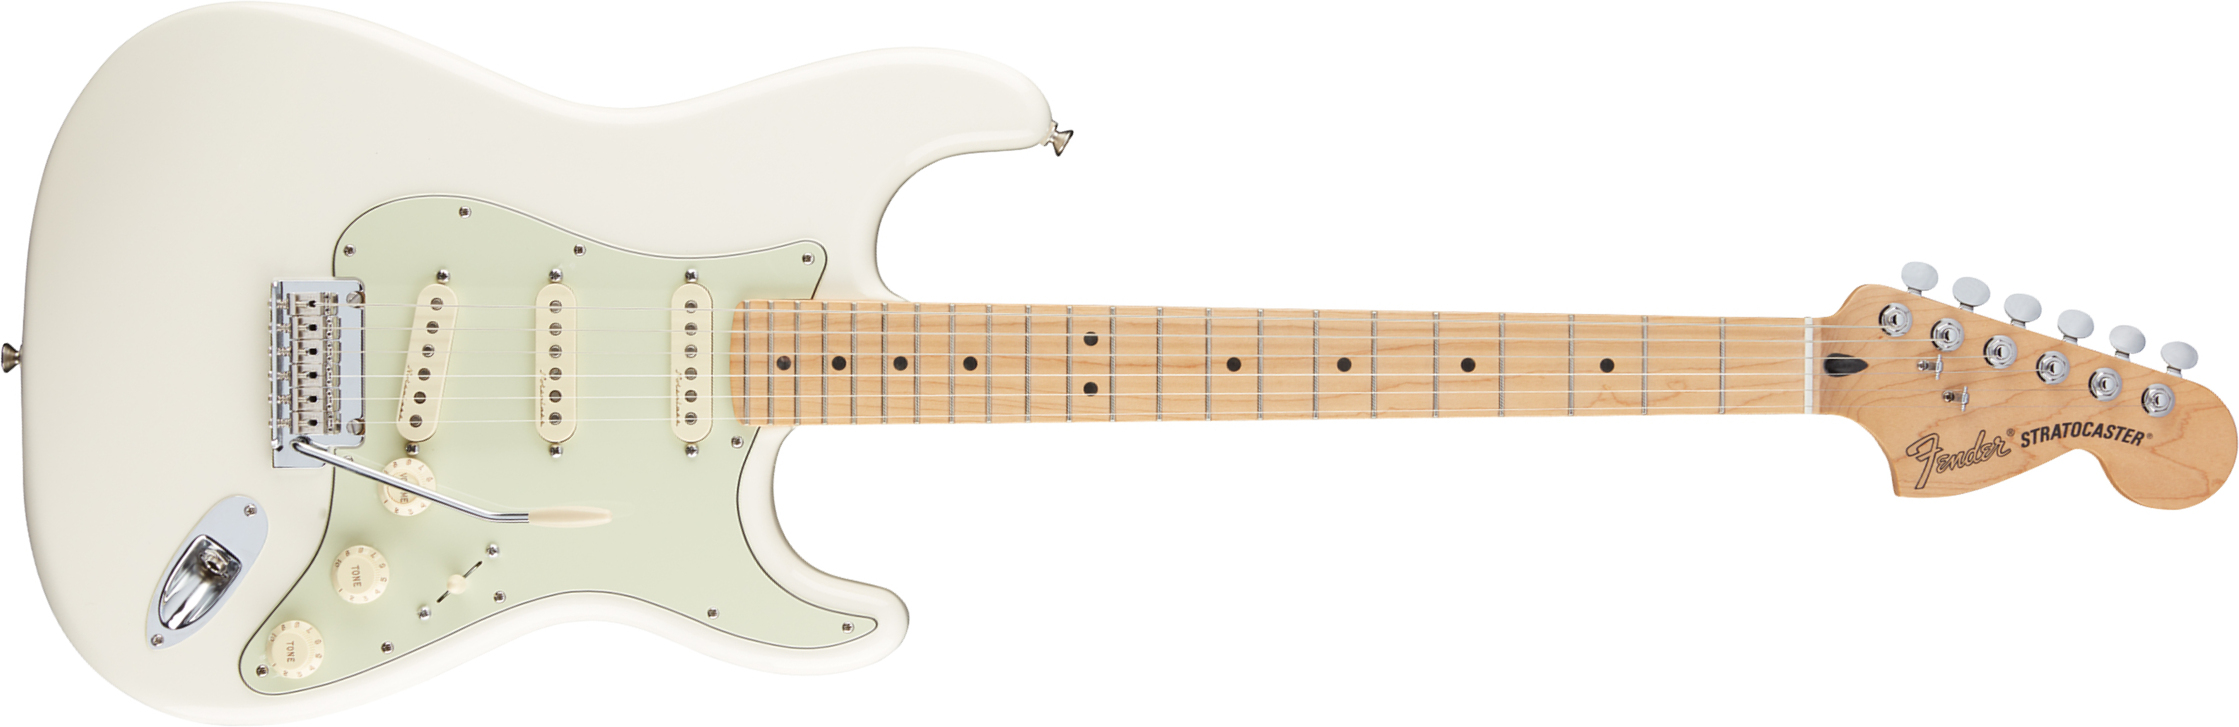 Fender Strat Deluxe Roadhouse Mex Mn - Olympic White - Elektrische gitaar in Str-vorm - Main picture